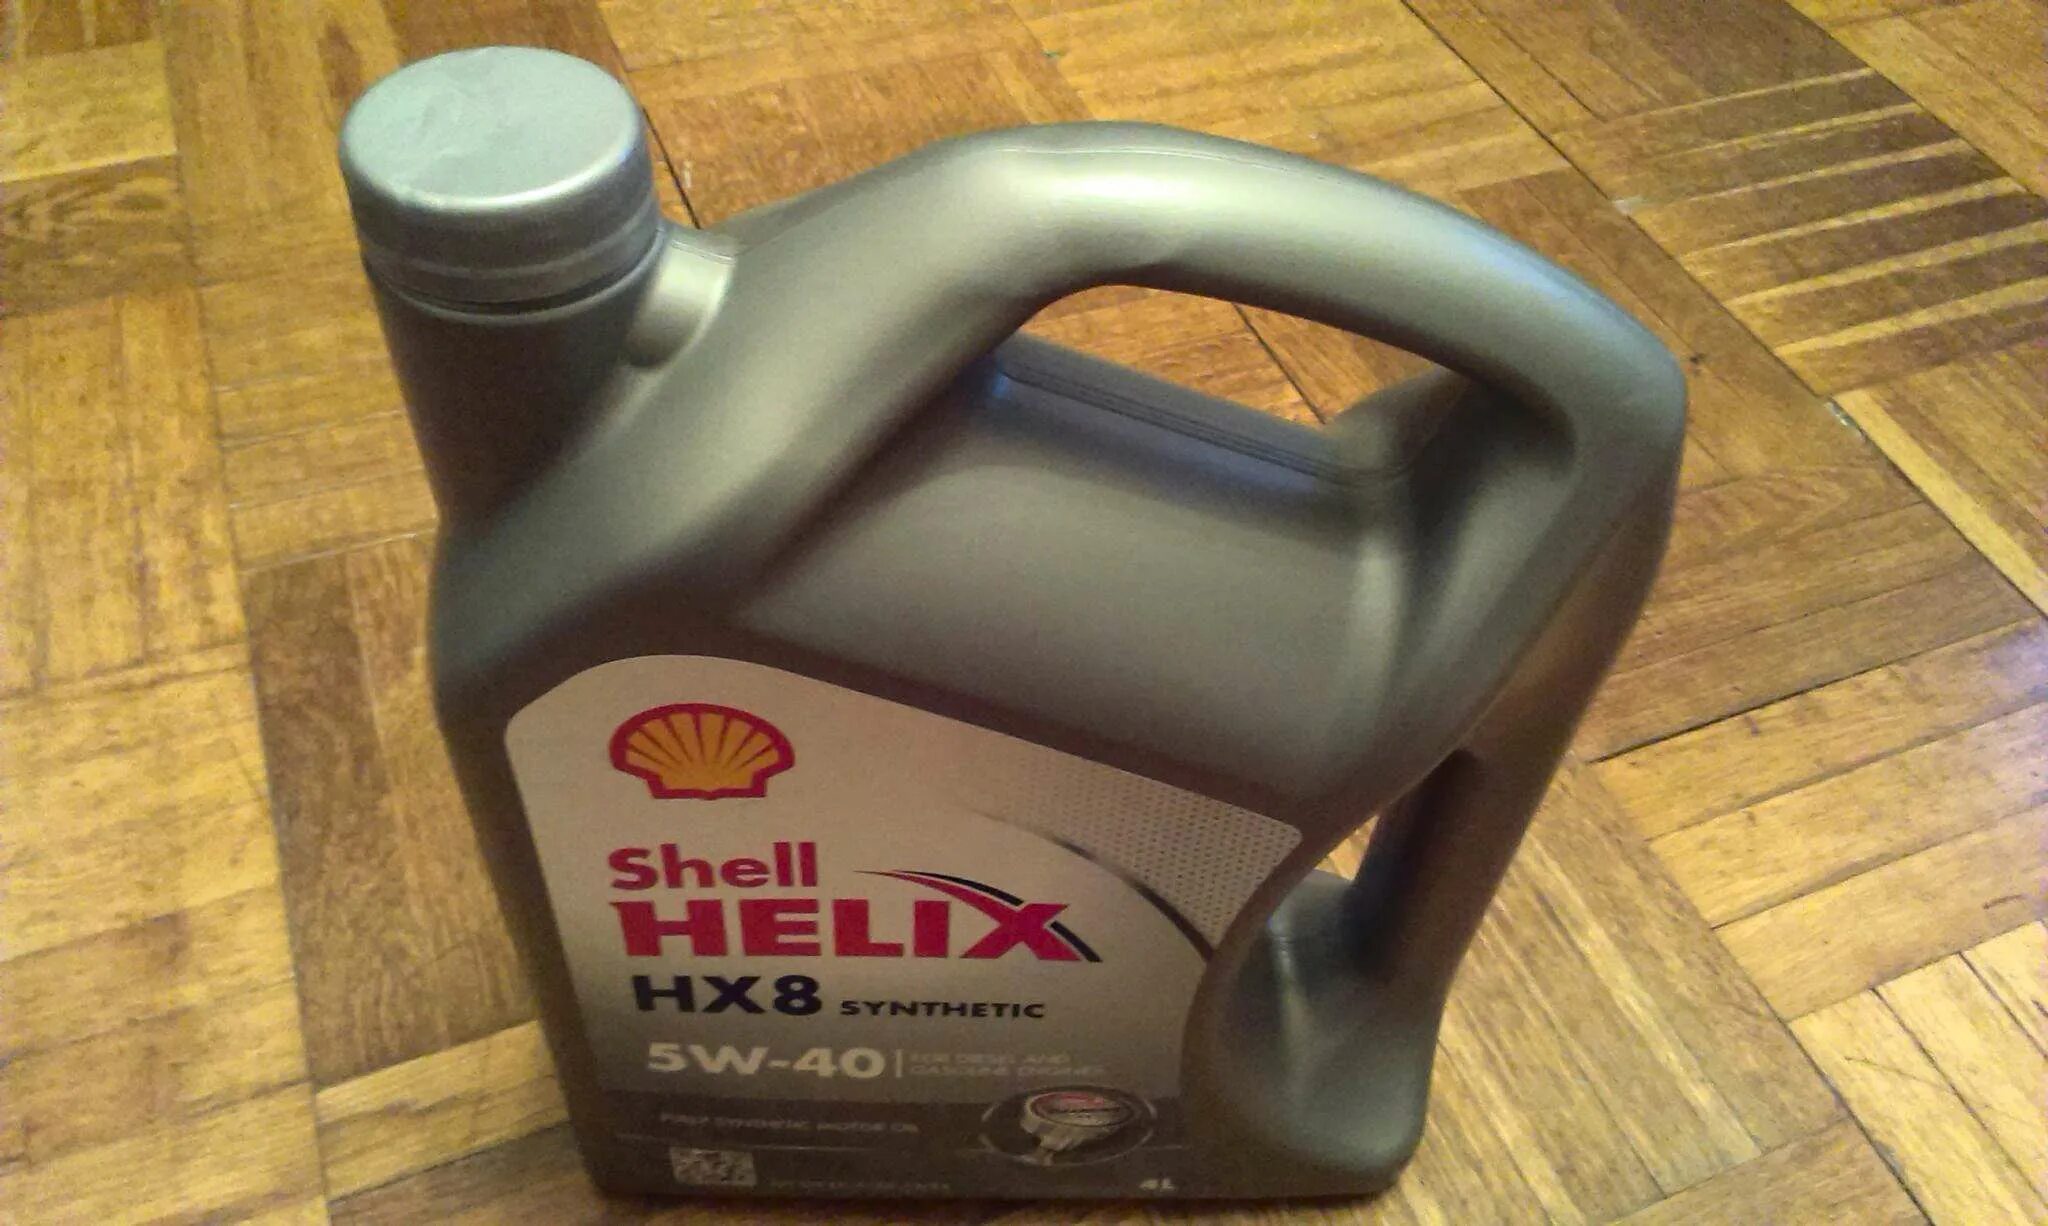 Shell hx8 Synthetic 5w40. Shell Helix hx8 Synthetic 5w-40. Helix hx8 Synthetic 5w-40. Shell Helix hx8 Synthetic 5w-40, 4 л. Масло helix hx8 5w40